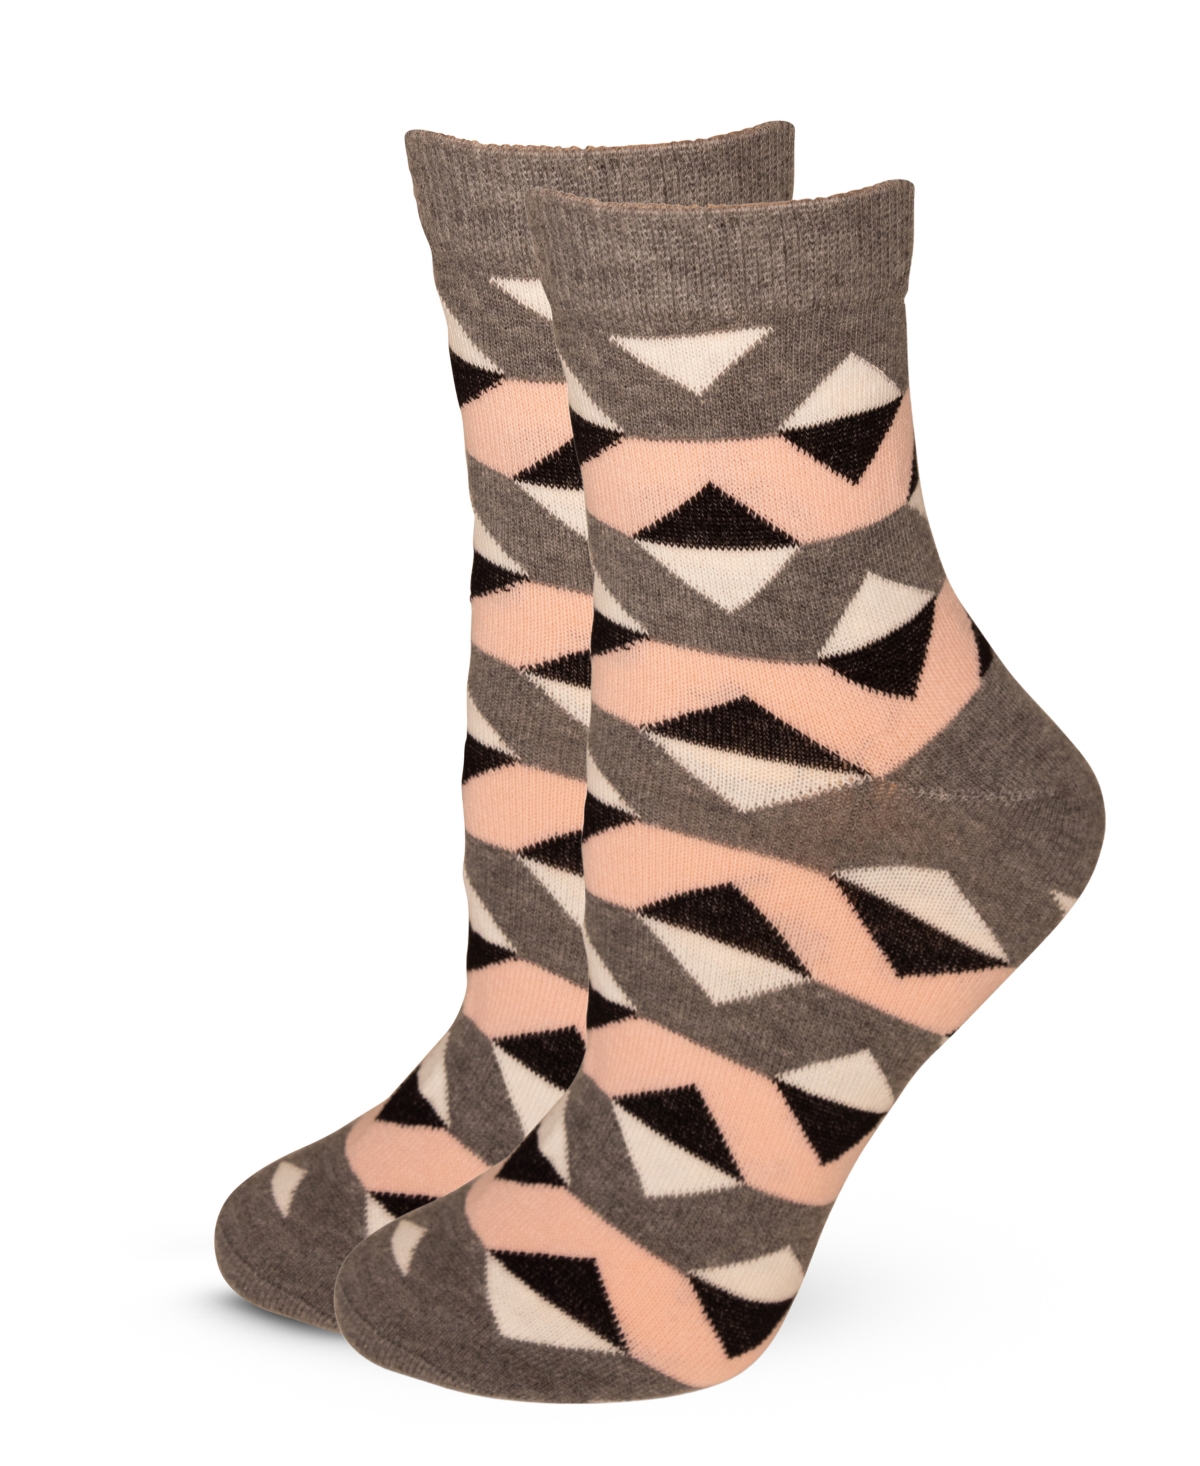 Women's European Made Zig-Zag Pattern Cotton Socks - Multicolor